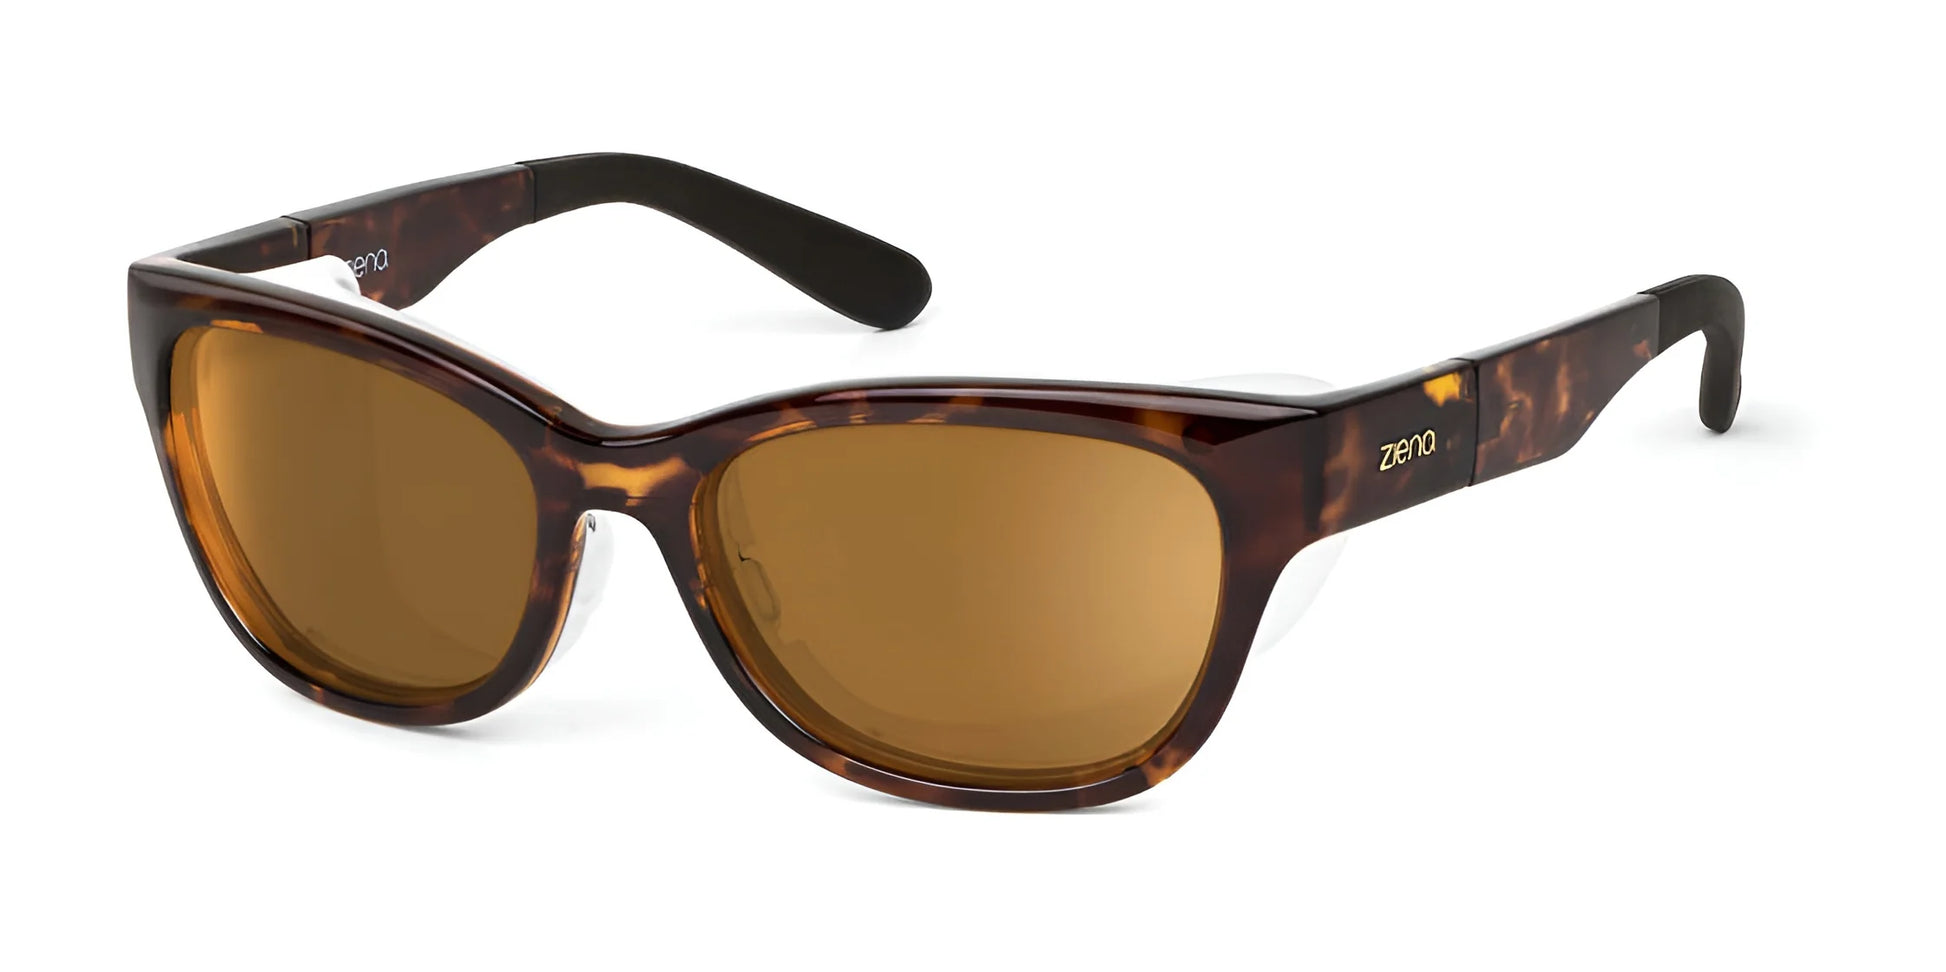 Ziena Marina Sunglasses Tortoise / Polarized Copper / Frost